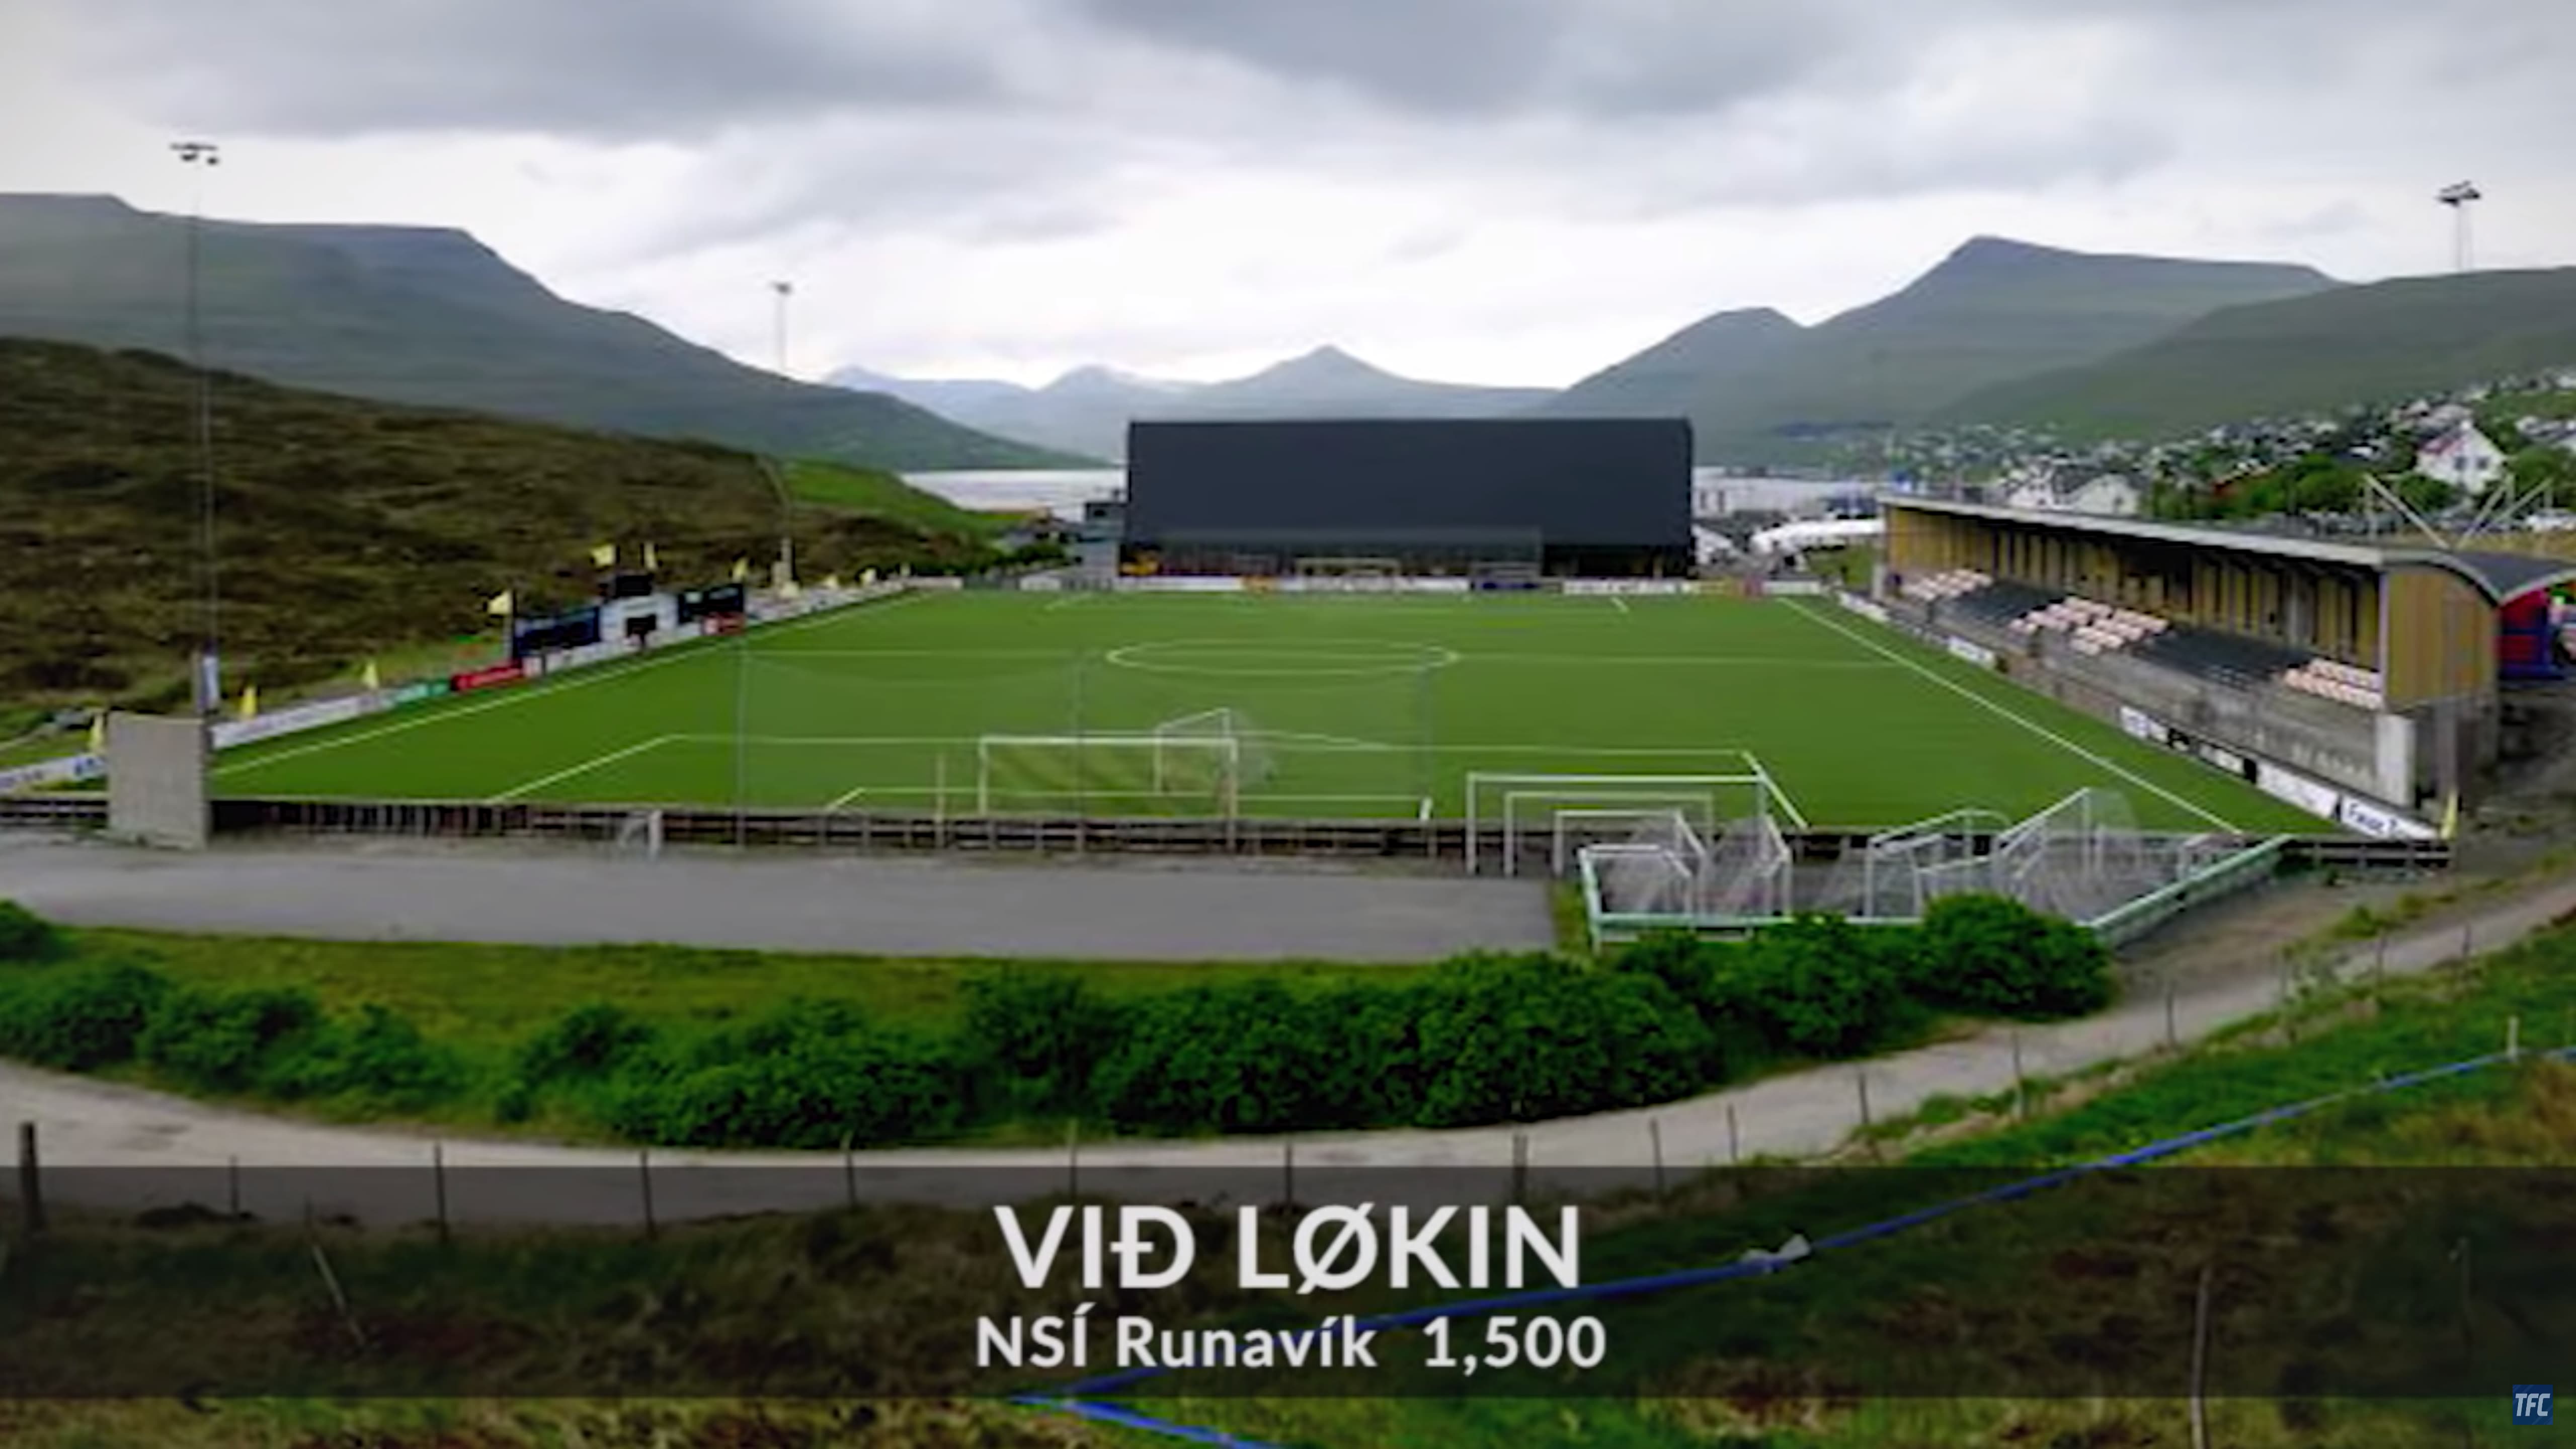 NSÍ Runavík stadium from the Faroe Islands Premier League